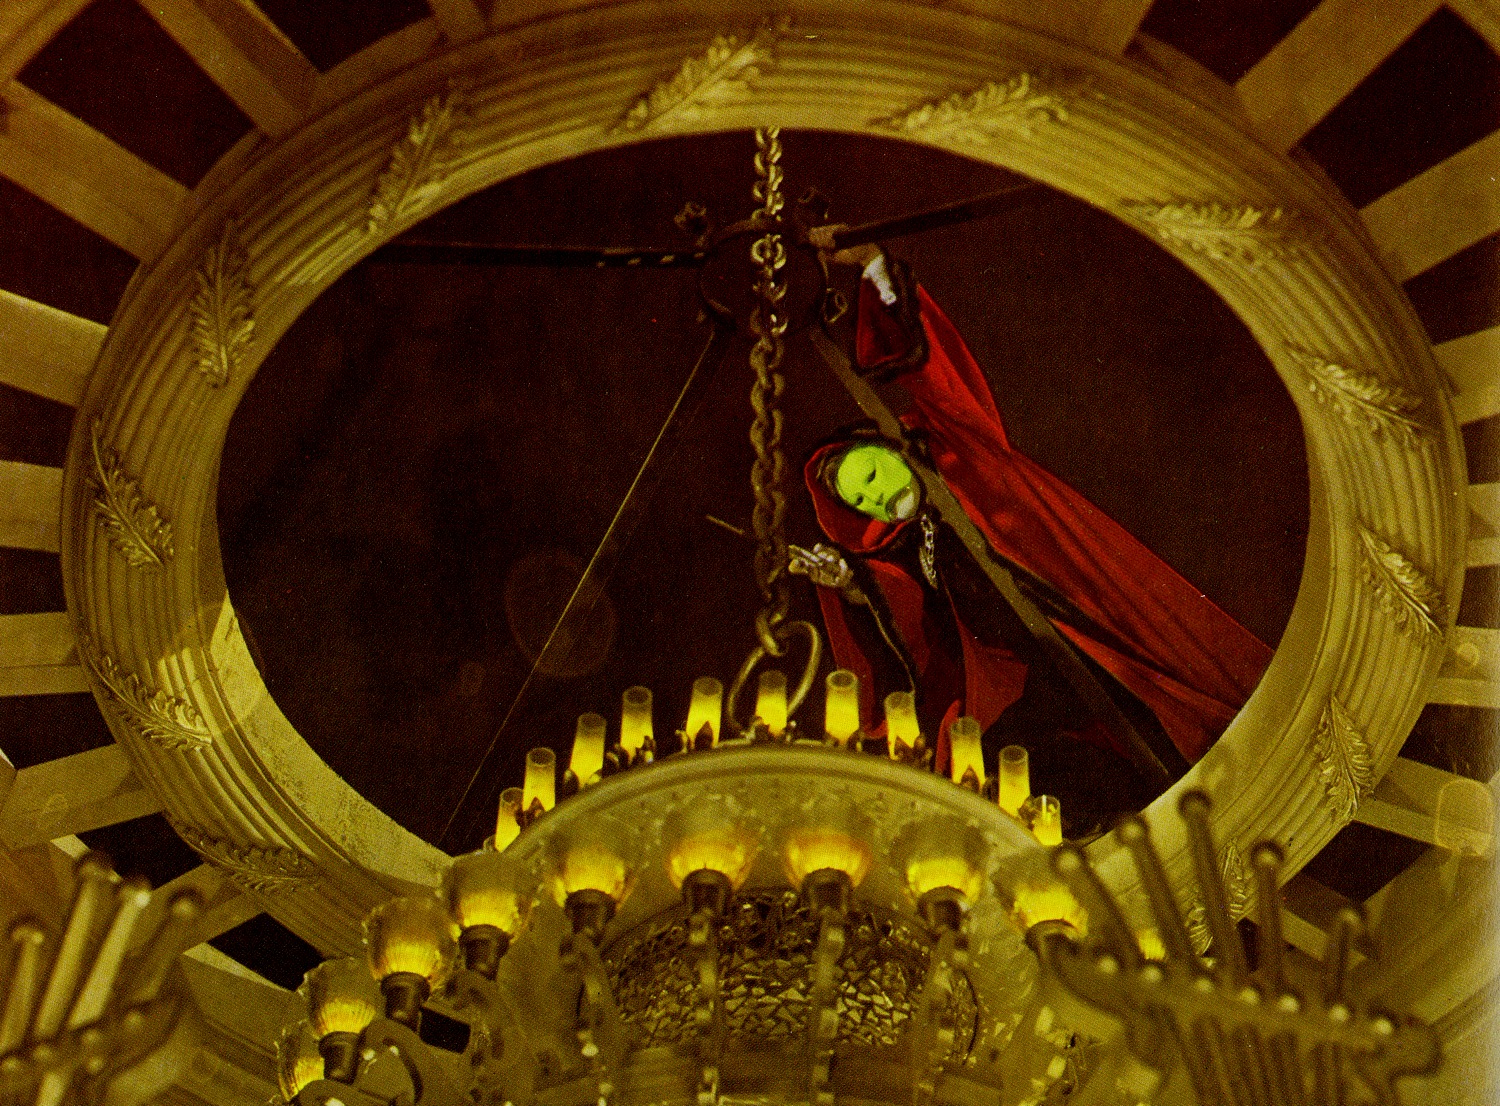 The Phantom (Claude Rains) cuts the chandelier in Phantom of the Opera (1943)